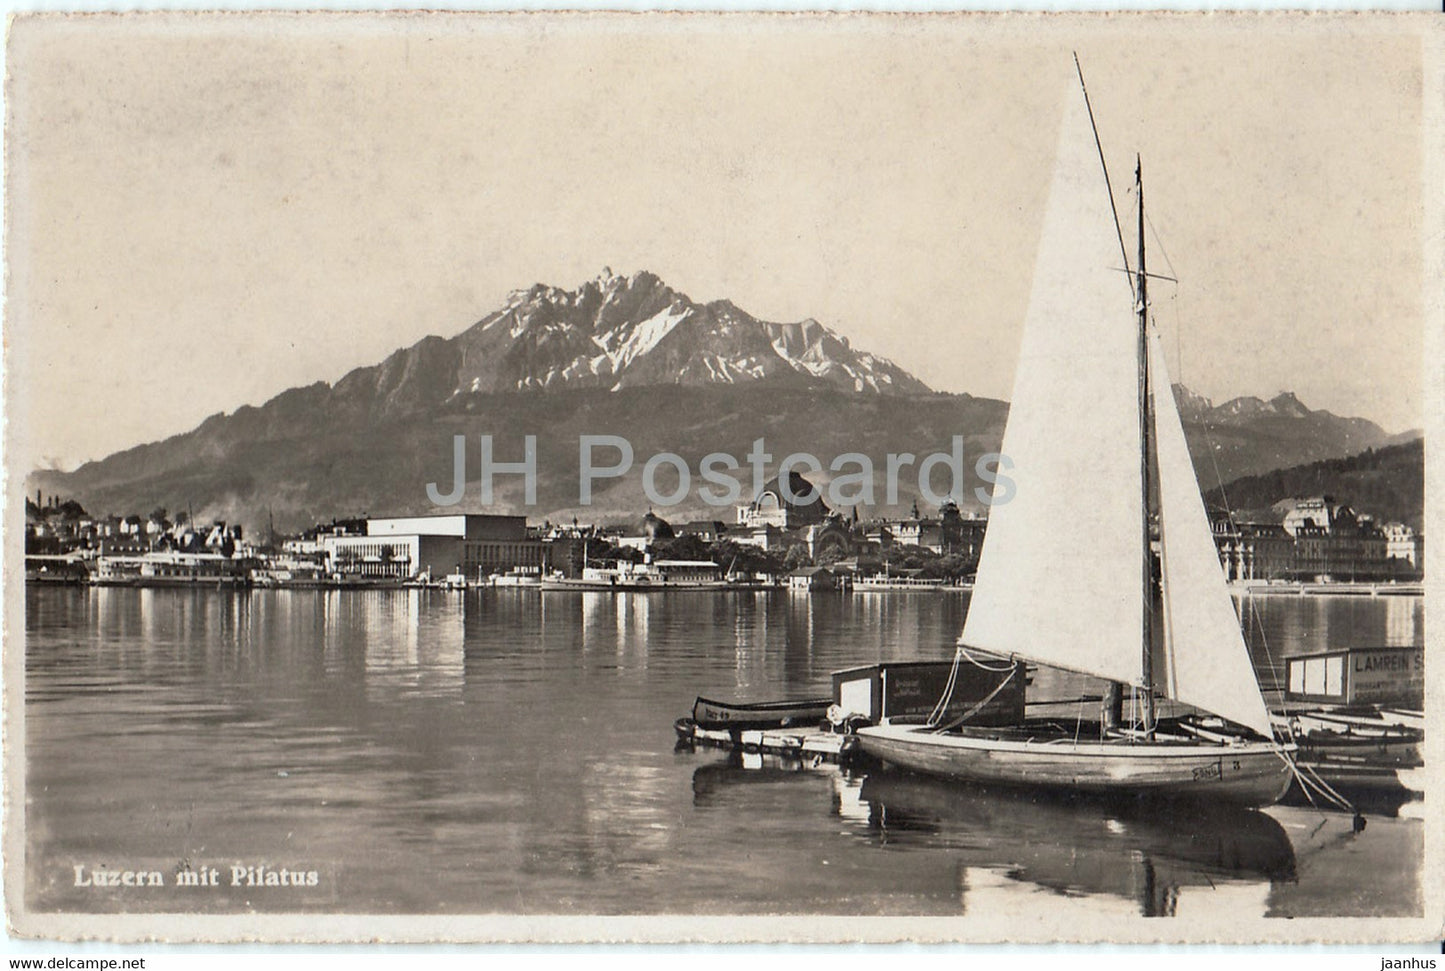 Luzern mit Pilatus - Lucerne - sailing boat - 5088 - old postcard - Switzerland - unused - JH Postcards